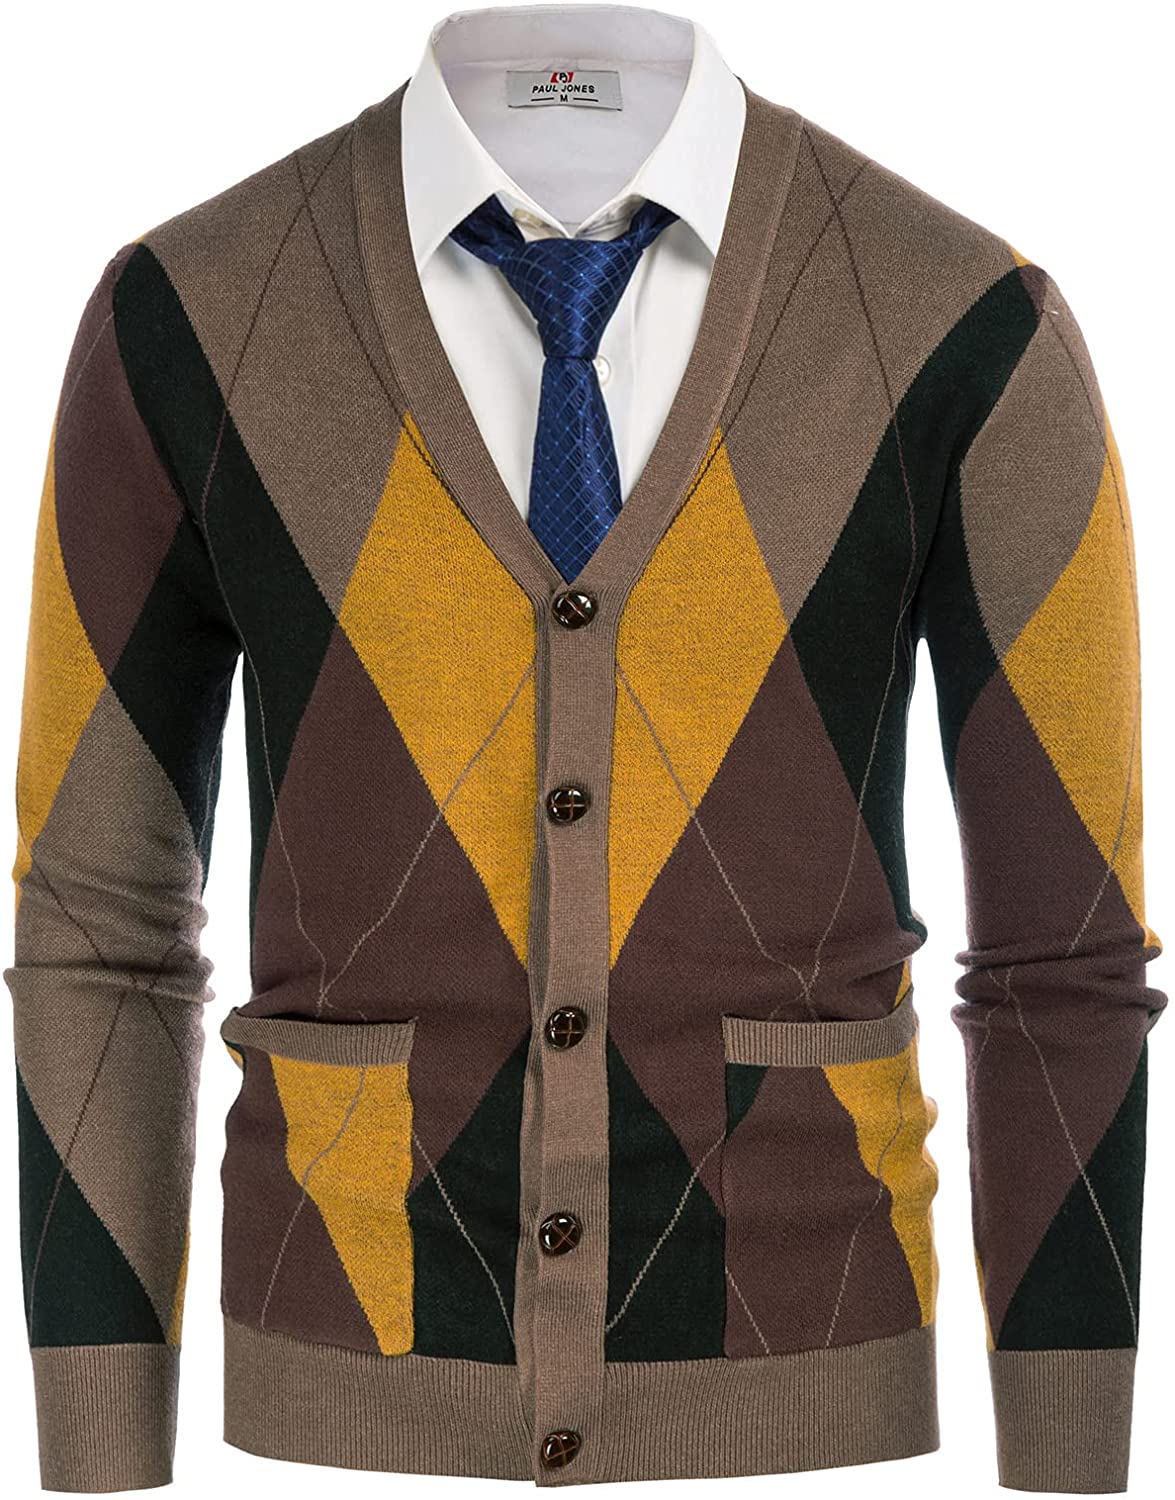 PJ PAUL JONES Mens Cardigan Sweater V-Neck Knitwear with Pocket Contrast Color Placket